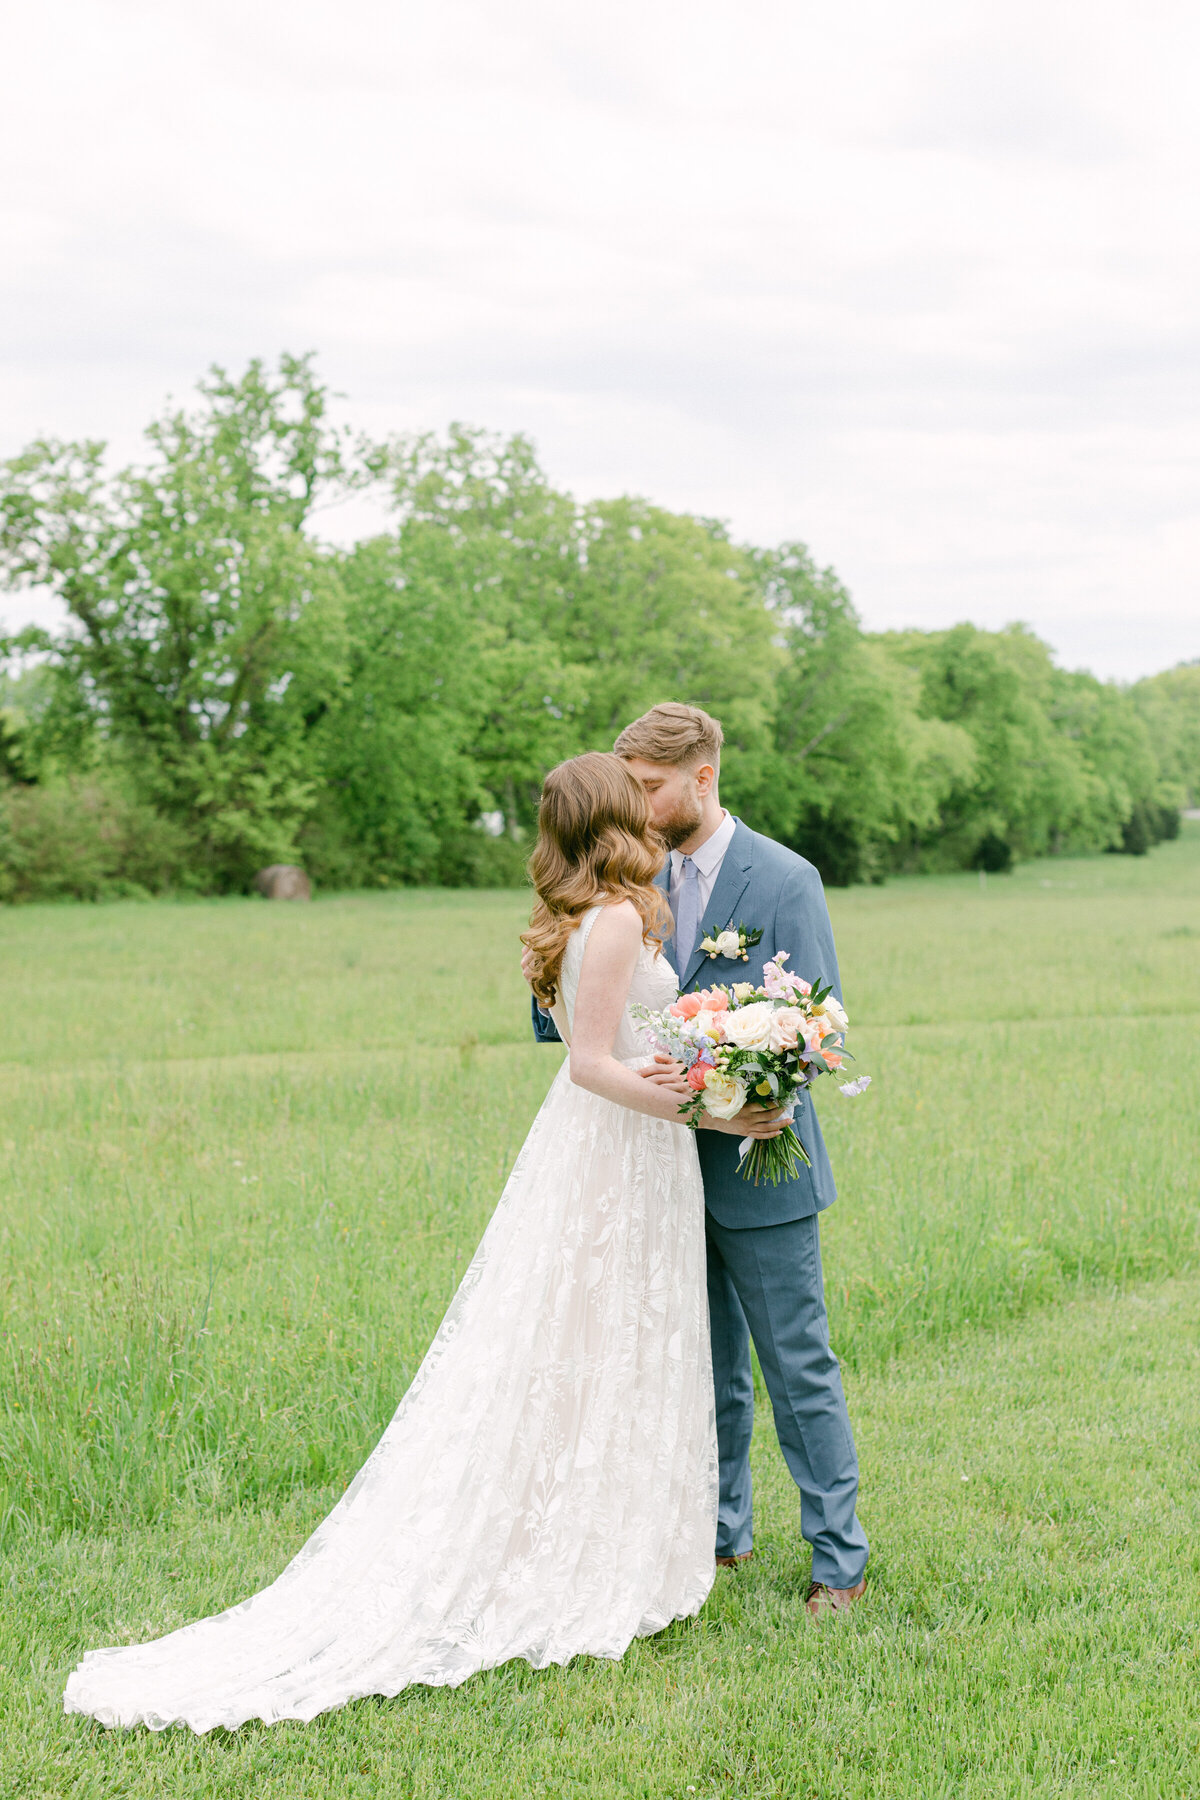 Ava-Vienneau-Nashville-Wedding-Photographer-Southall-Meadows-10